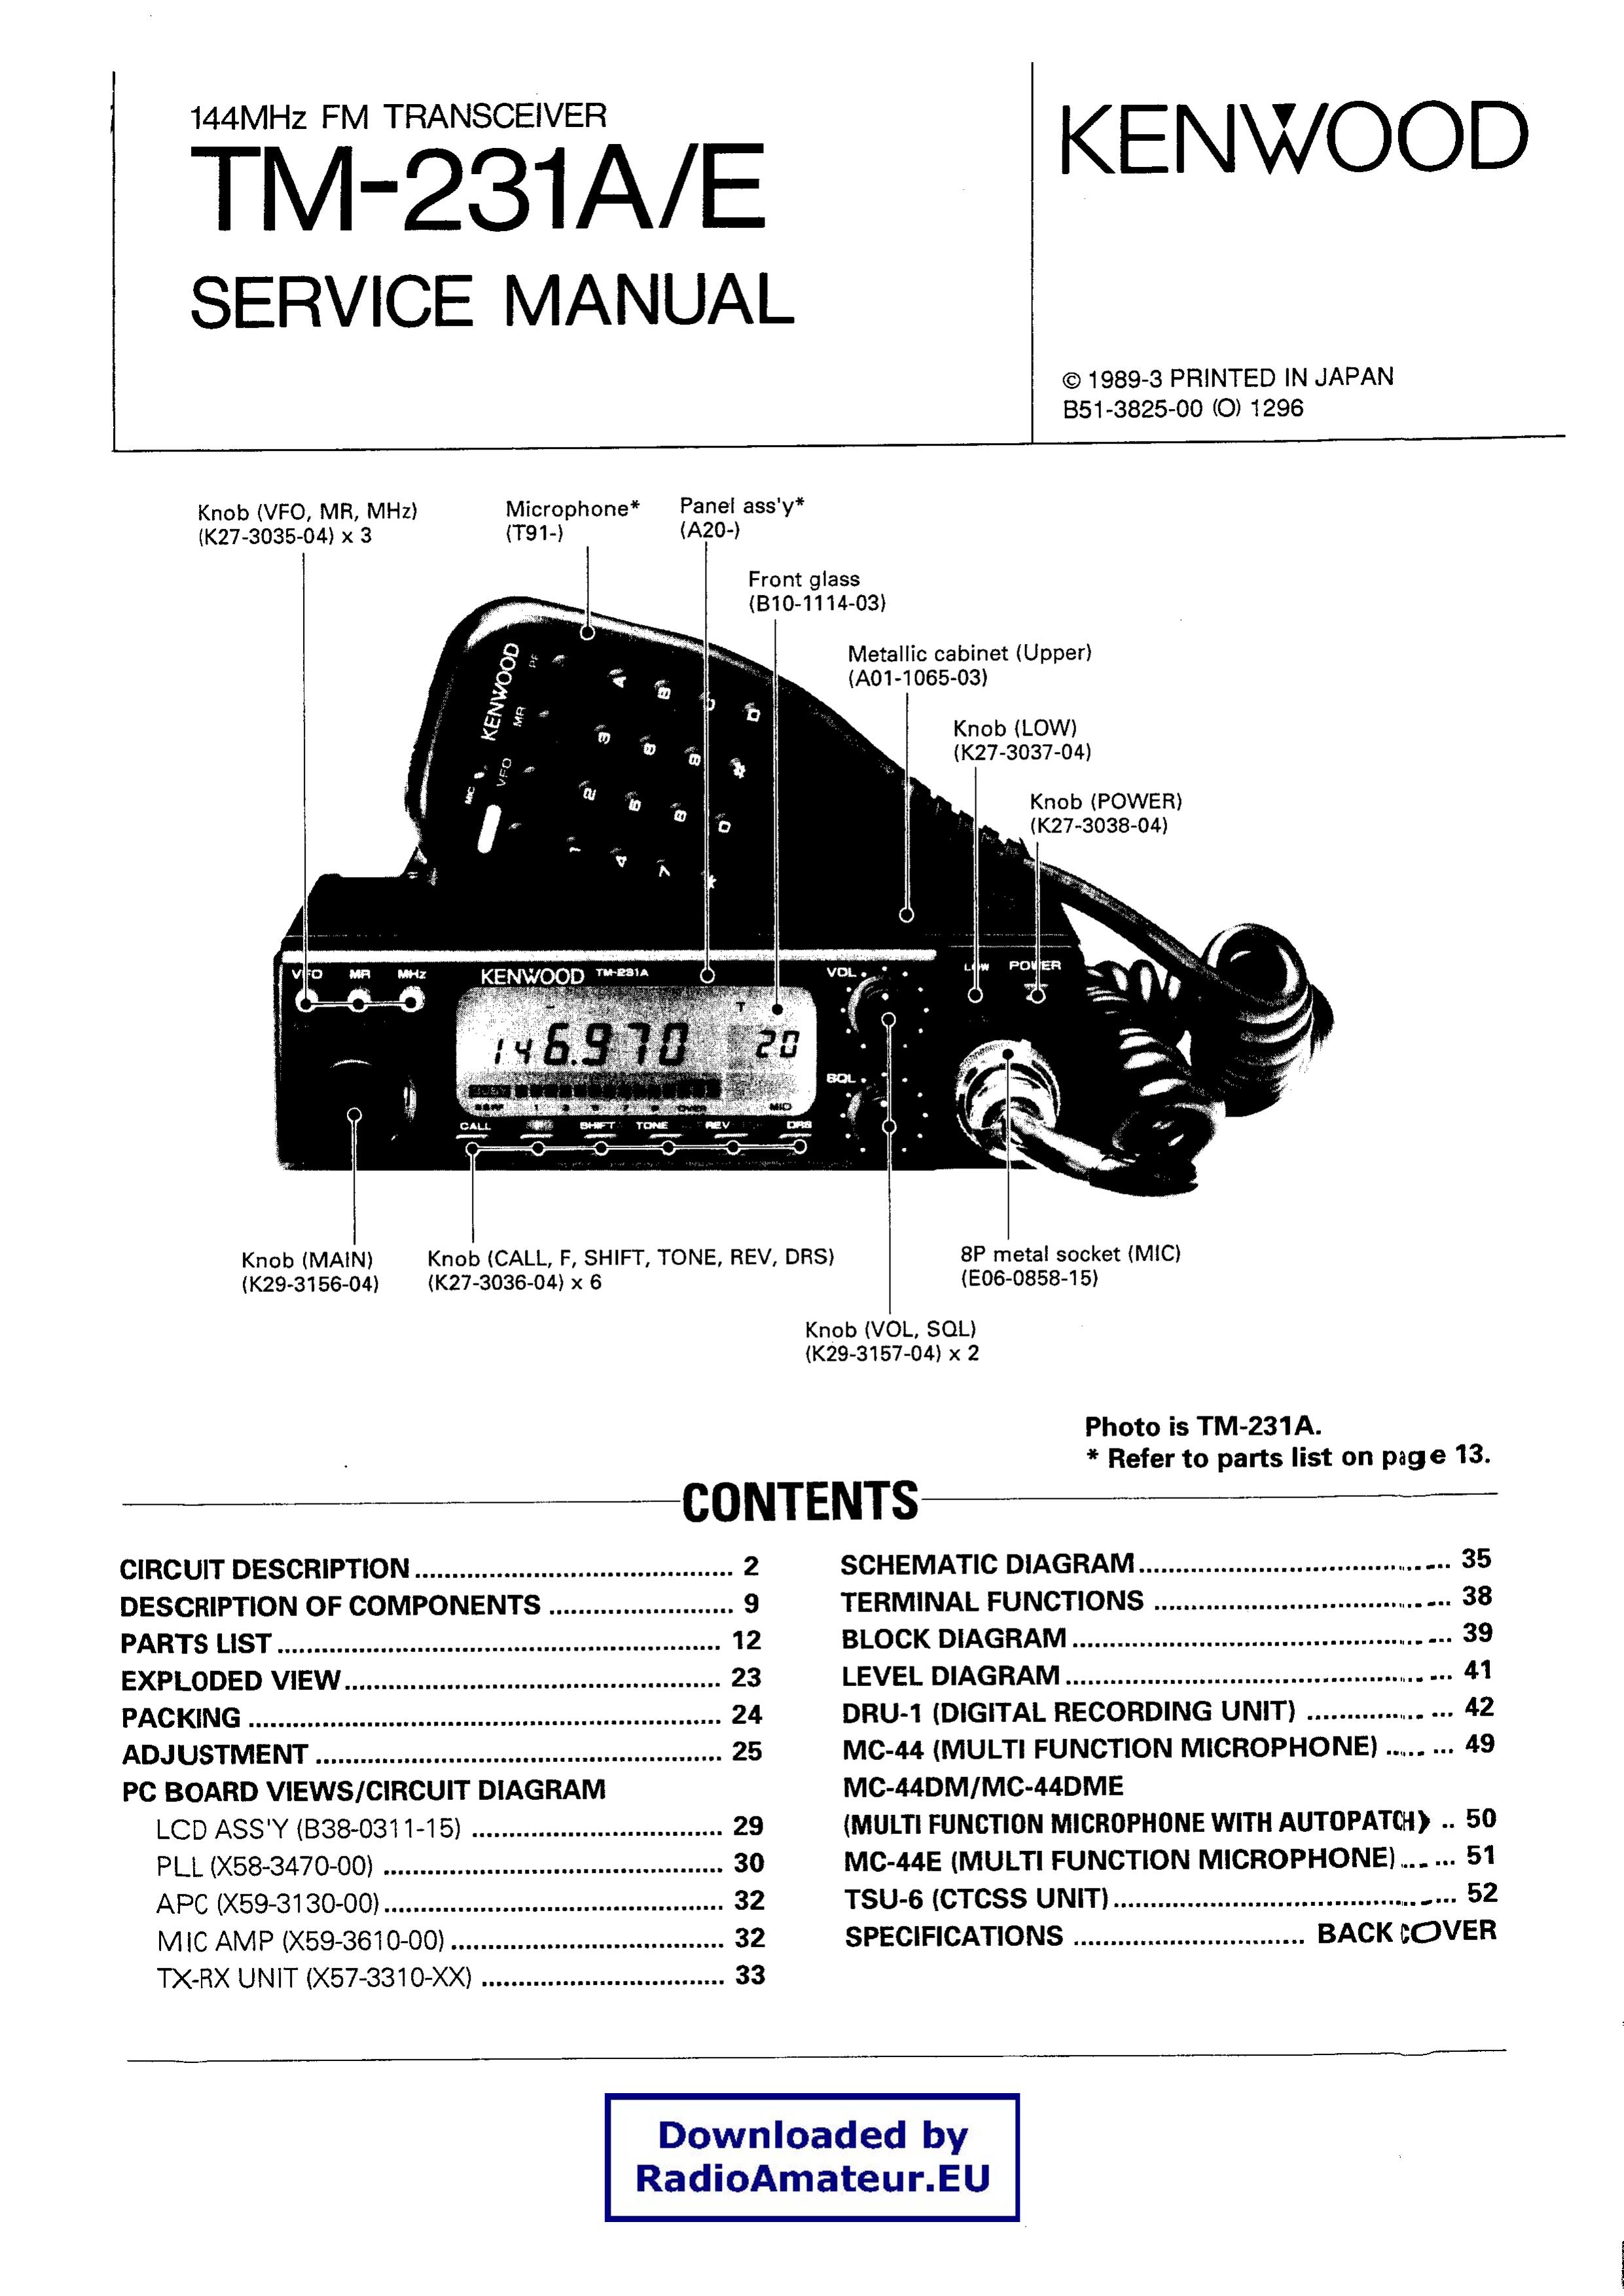 Kenwood kenwood Marine Radio User Manual